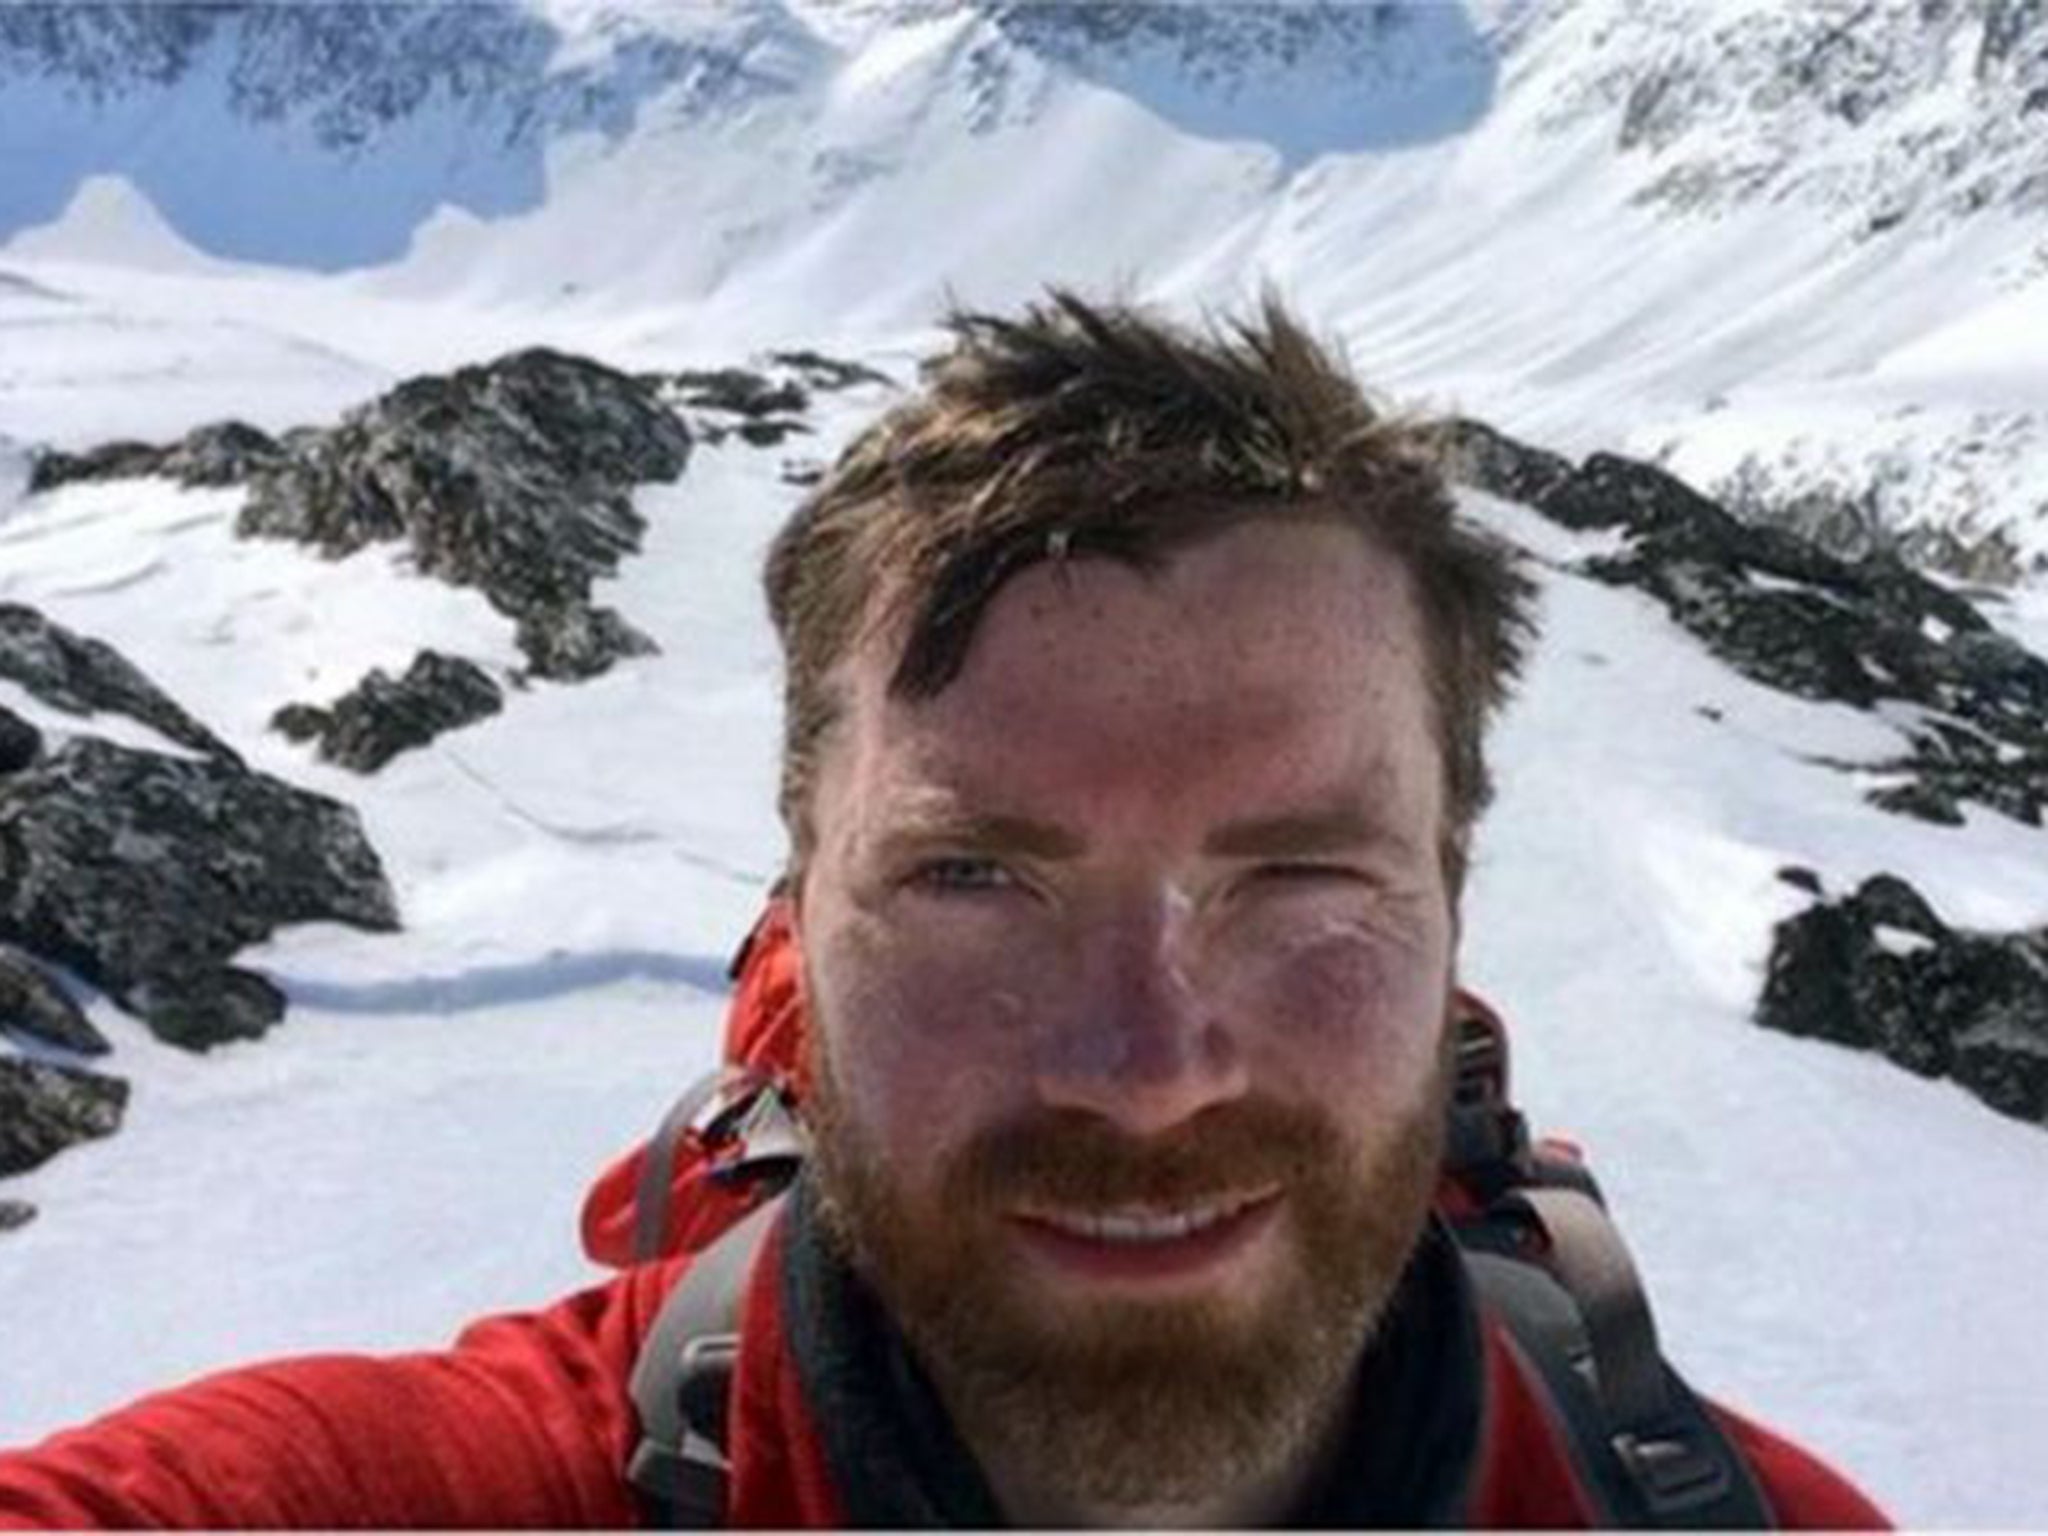 Luke Robertson is spending 40 days alone dragging 130kg of equipment across 730 miles of ice